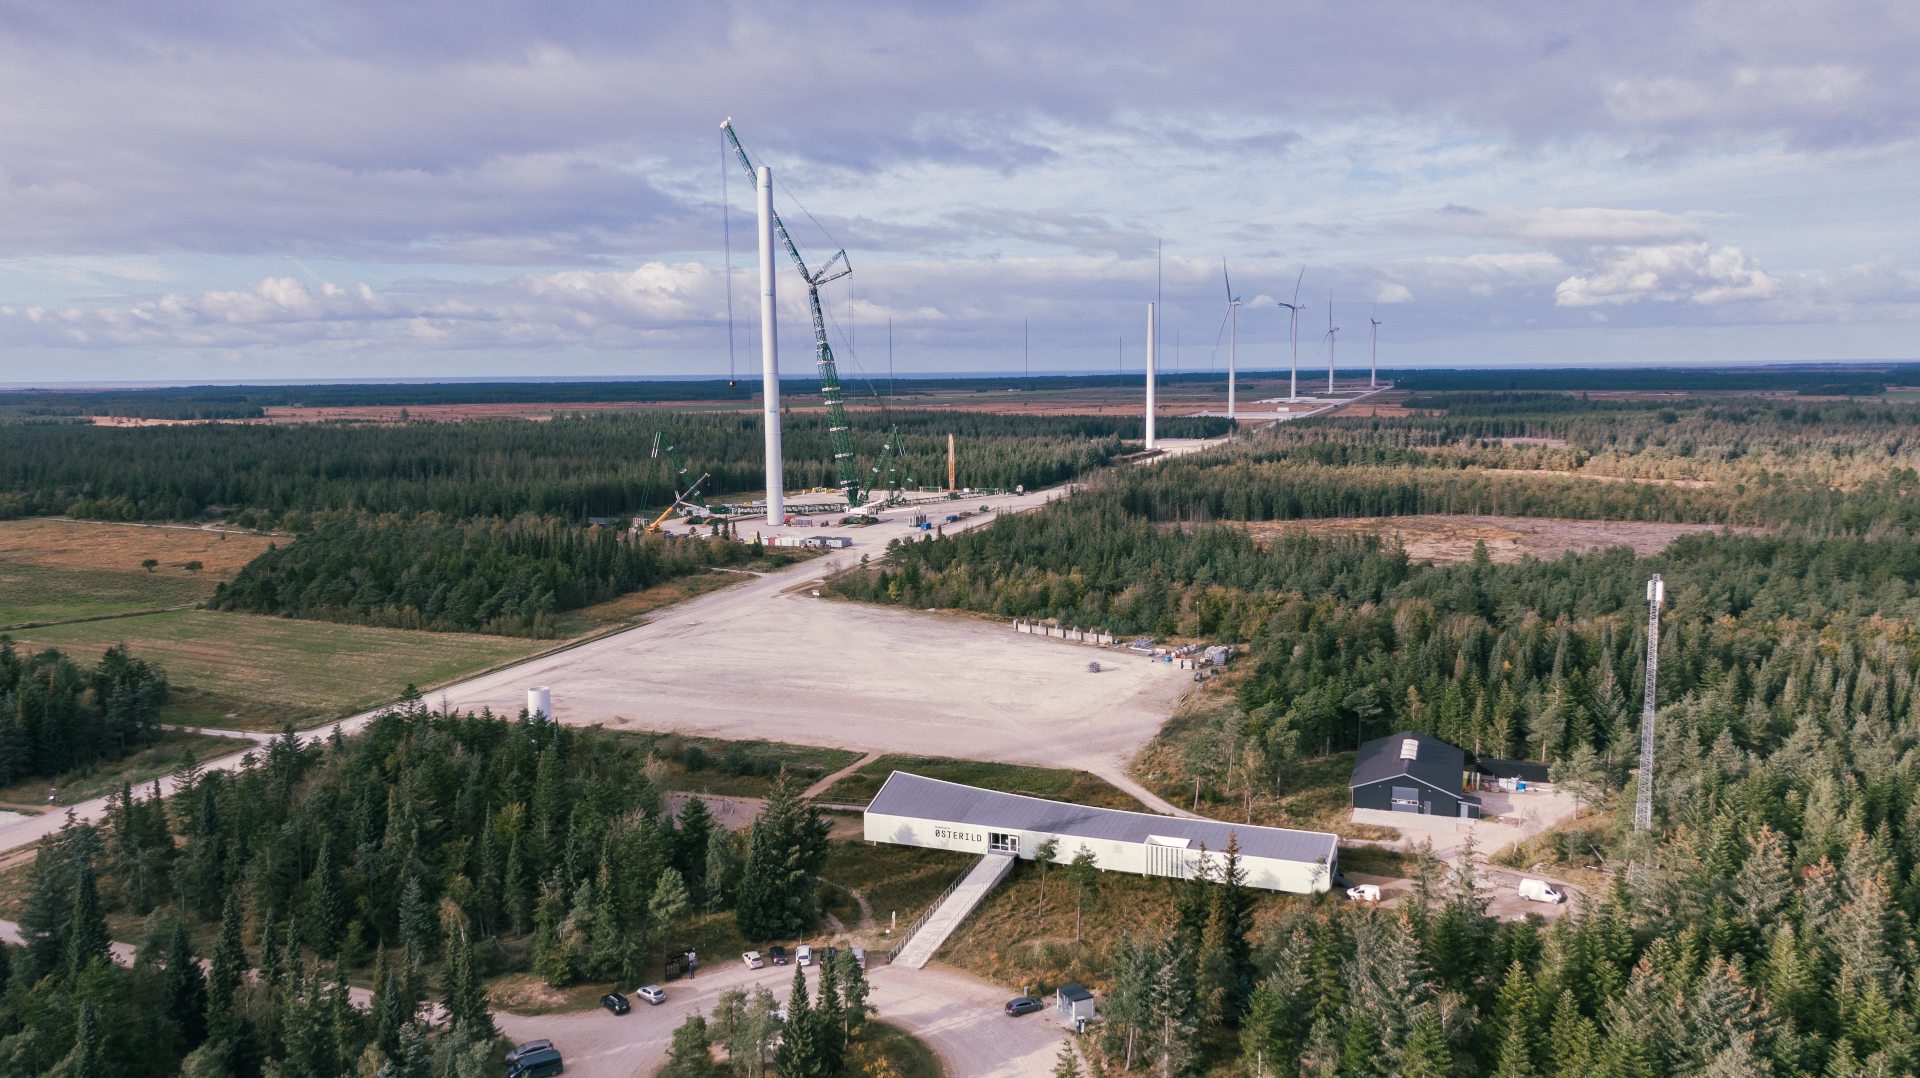 Drone photo of Østerild Test Center